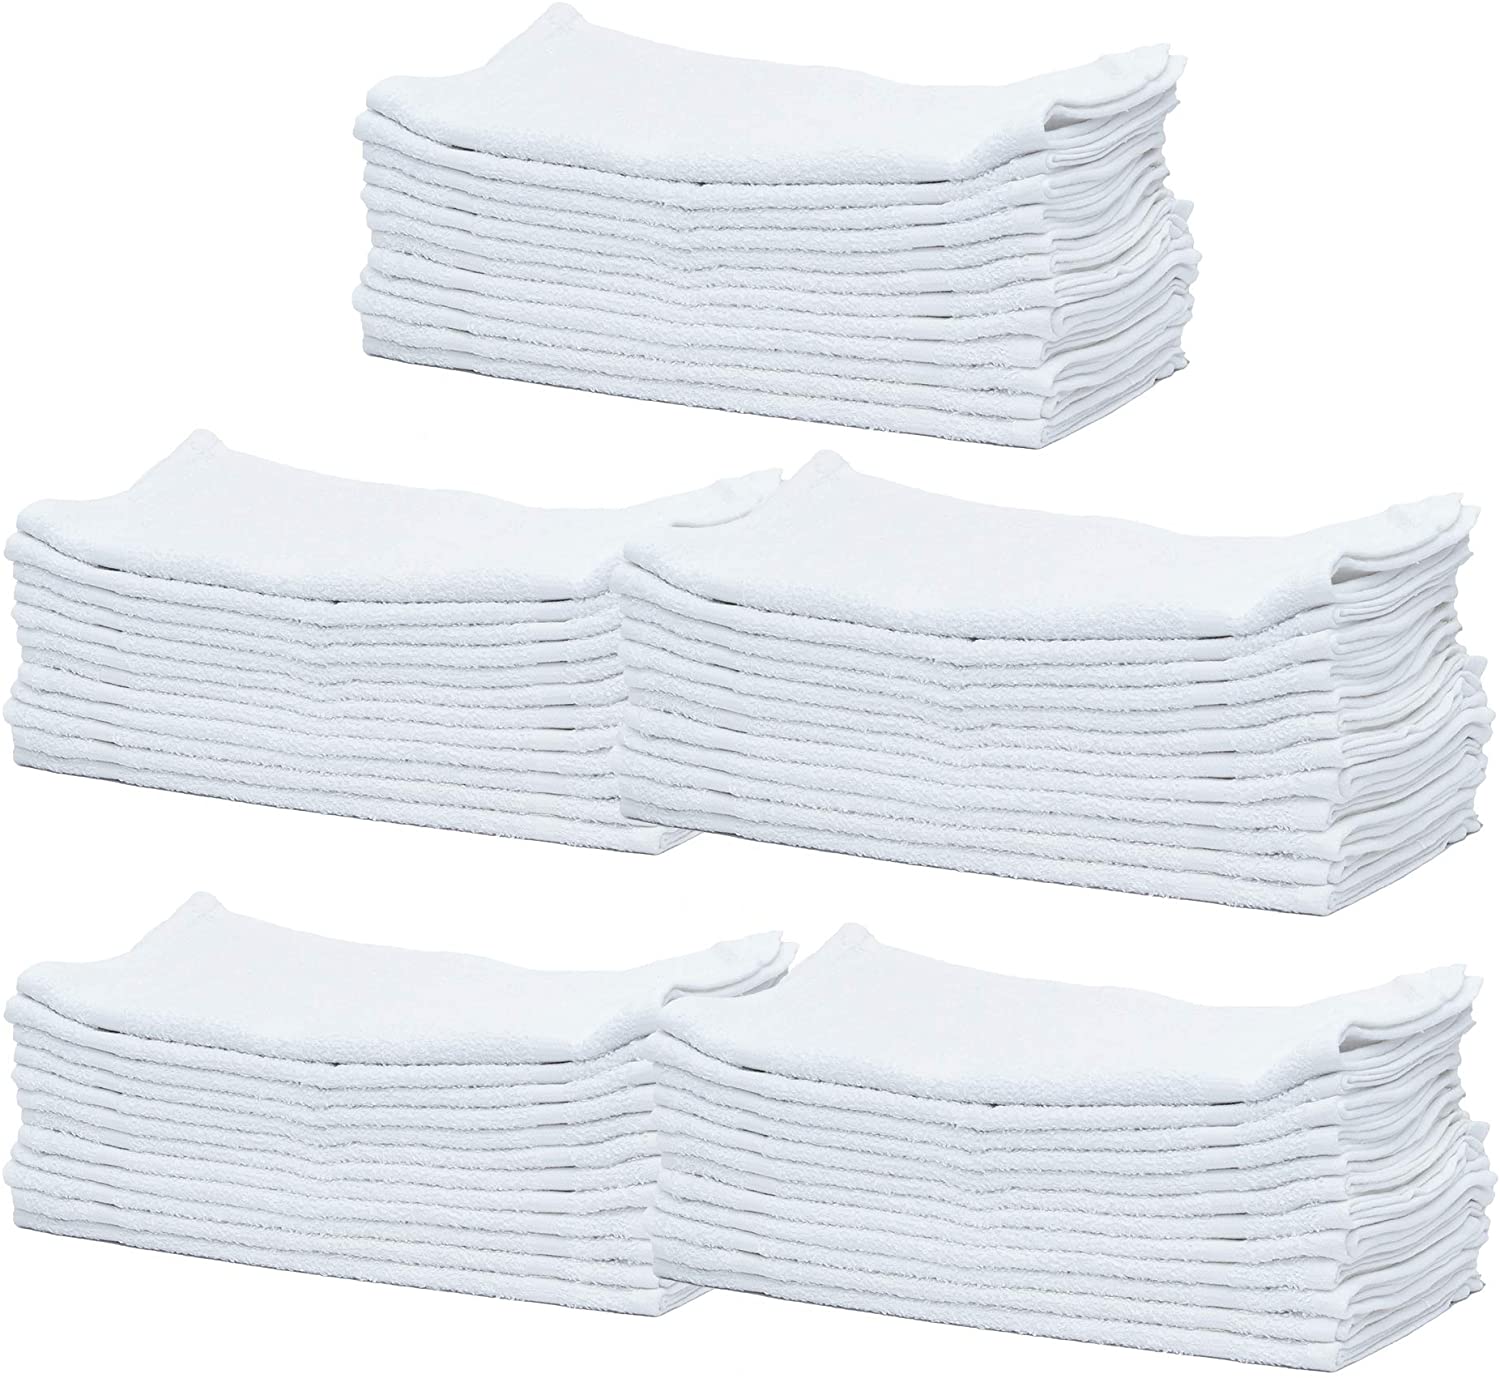 White Hand Towel - 16 x 27-2.75 Lbs